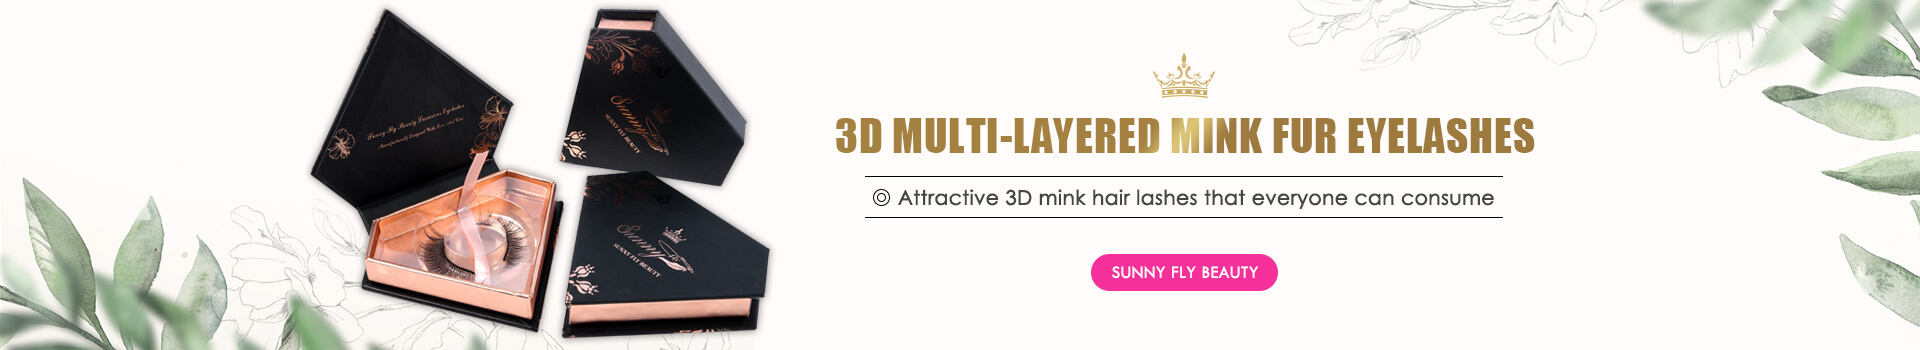 3D Multi-layered Mink Fur Eyelashes - Standard